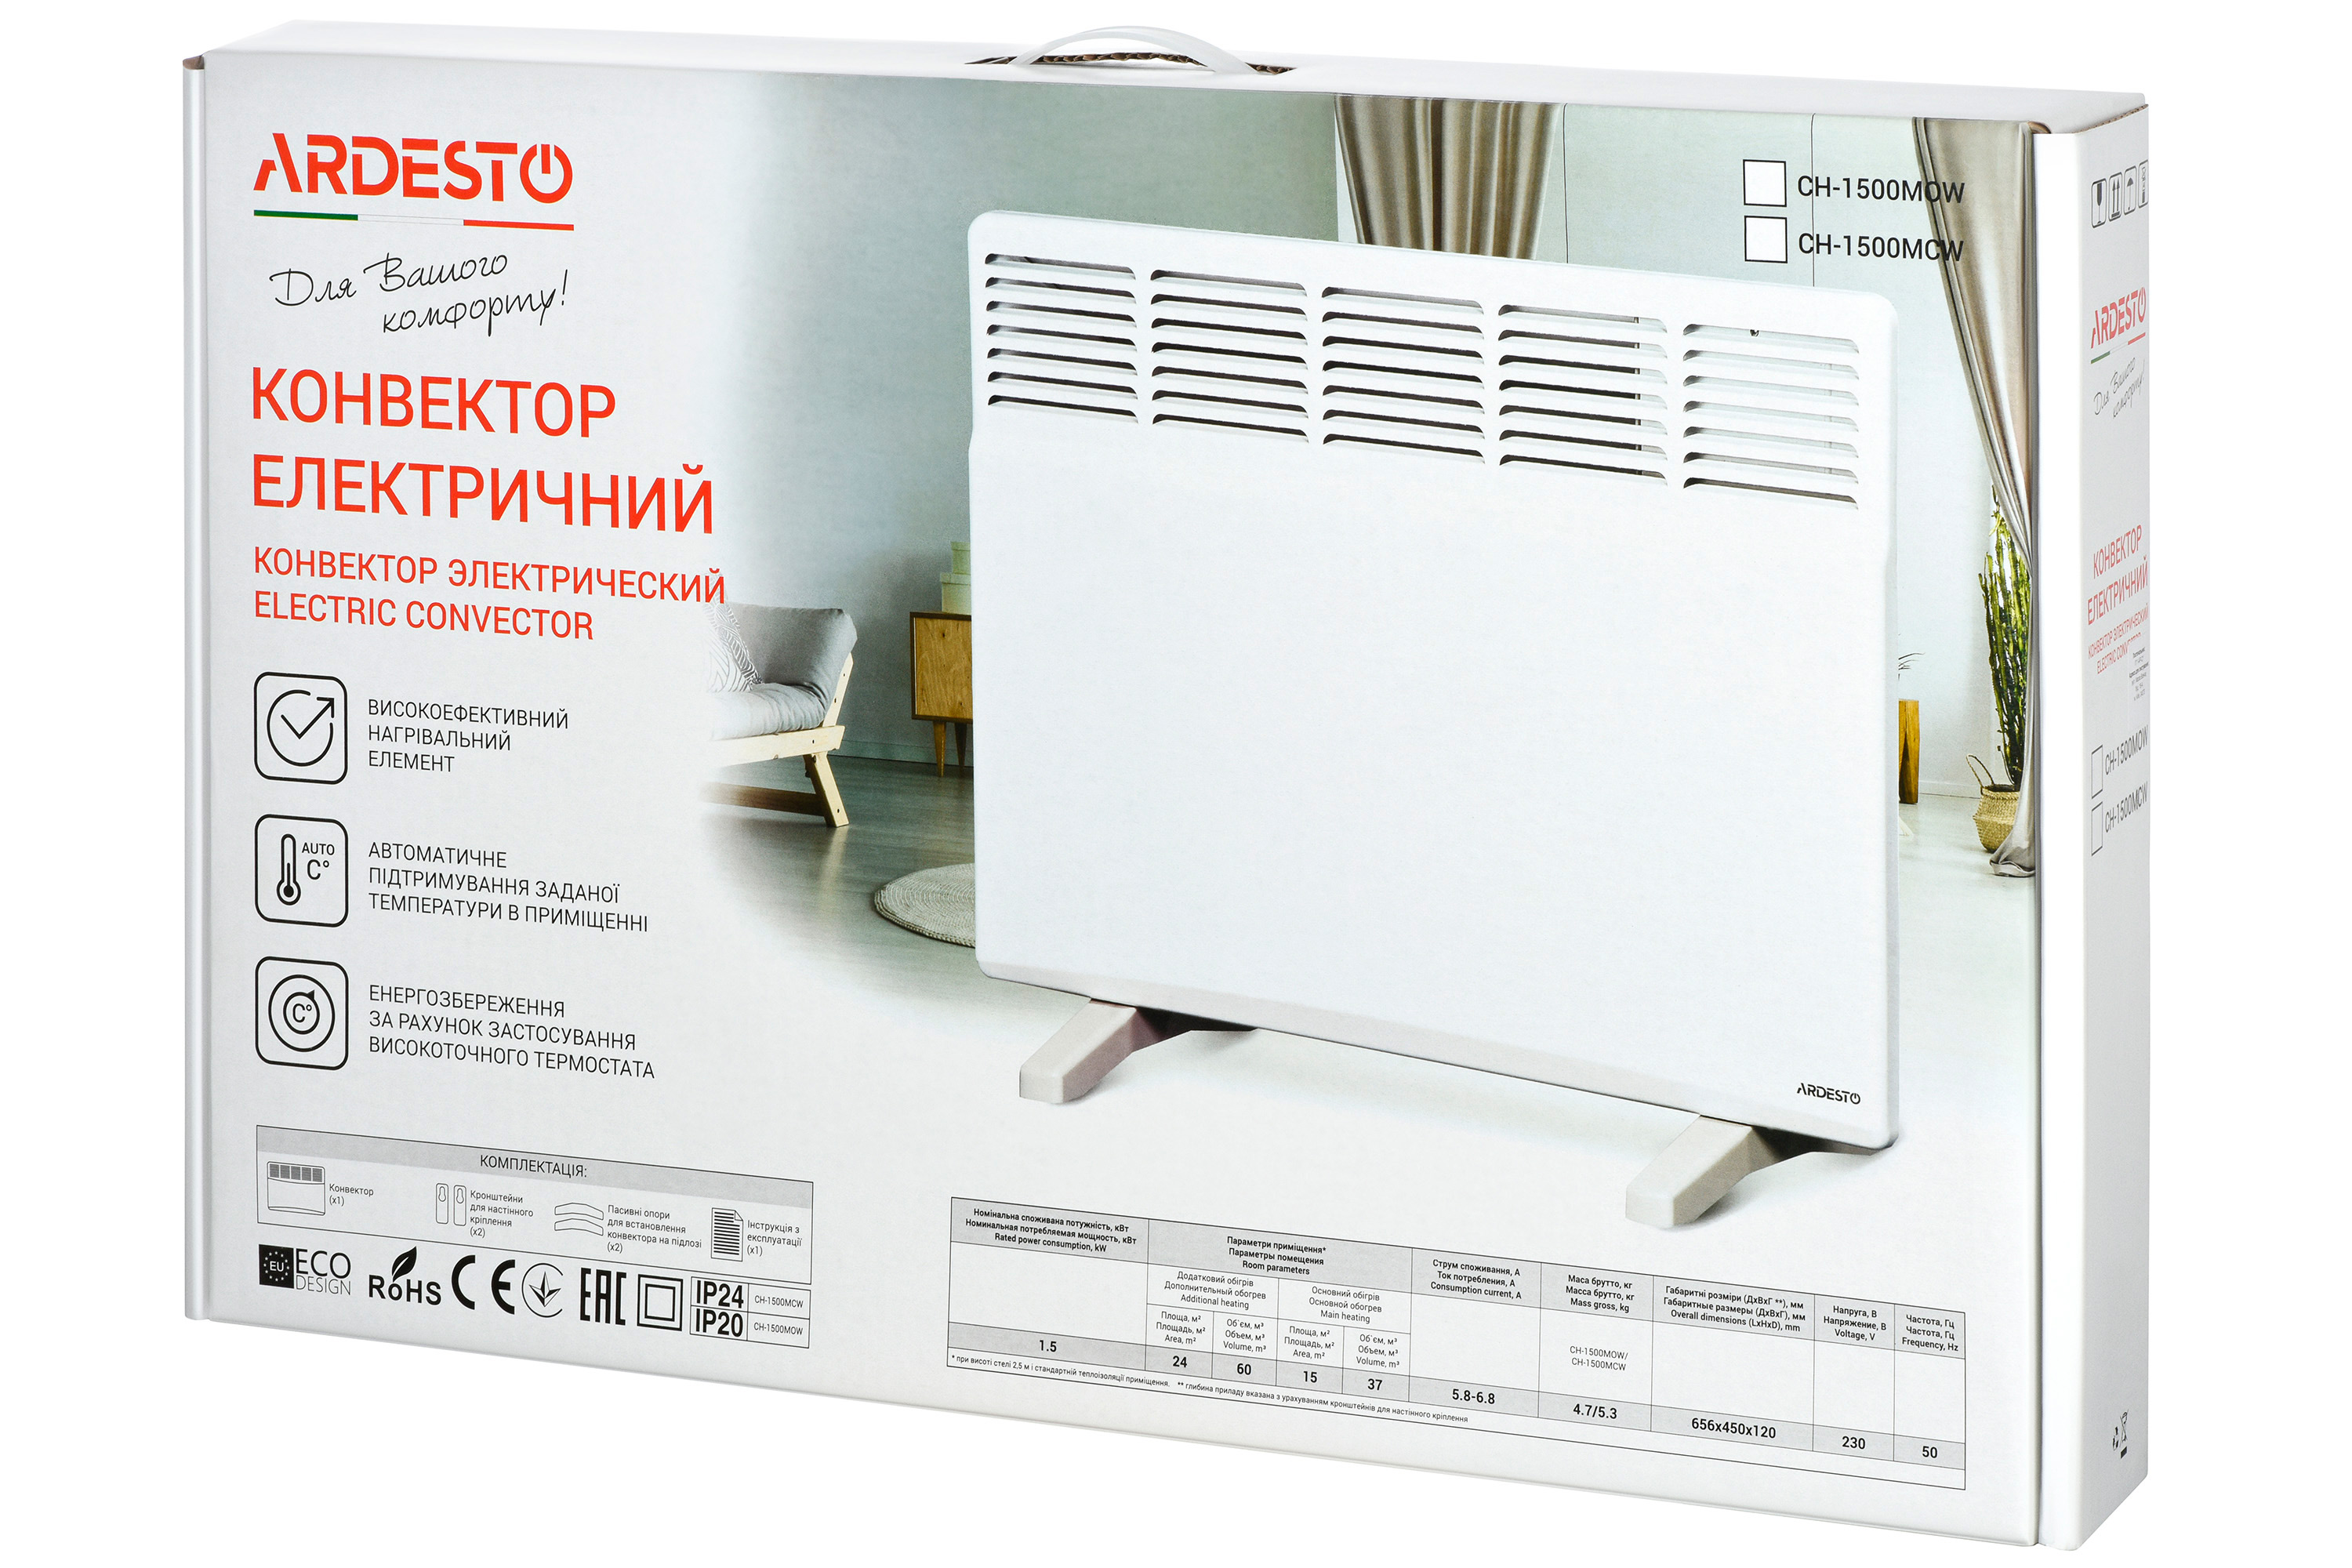 Электрический конвектор Ardesto CH-1500MCW характеристики - фотография 7